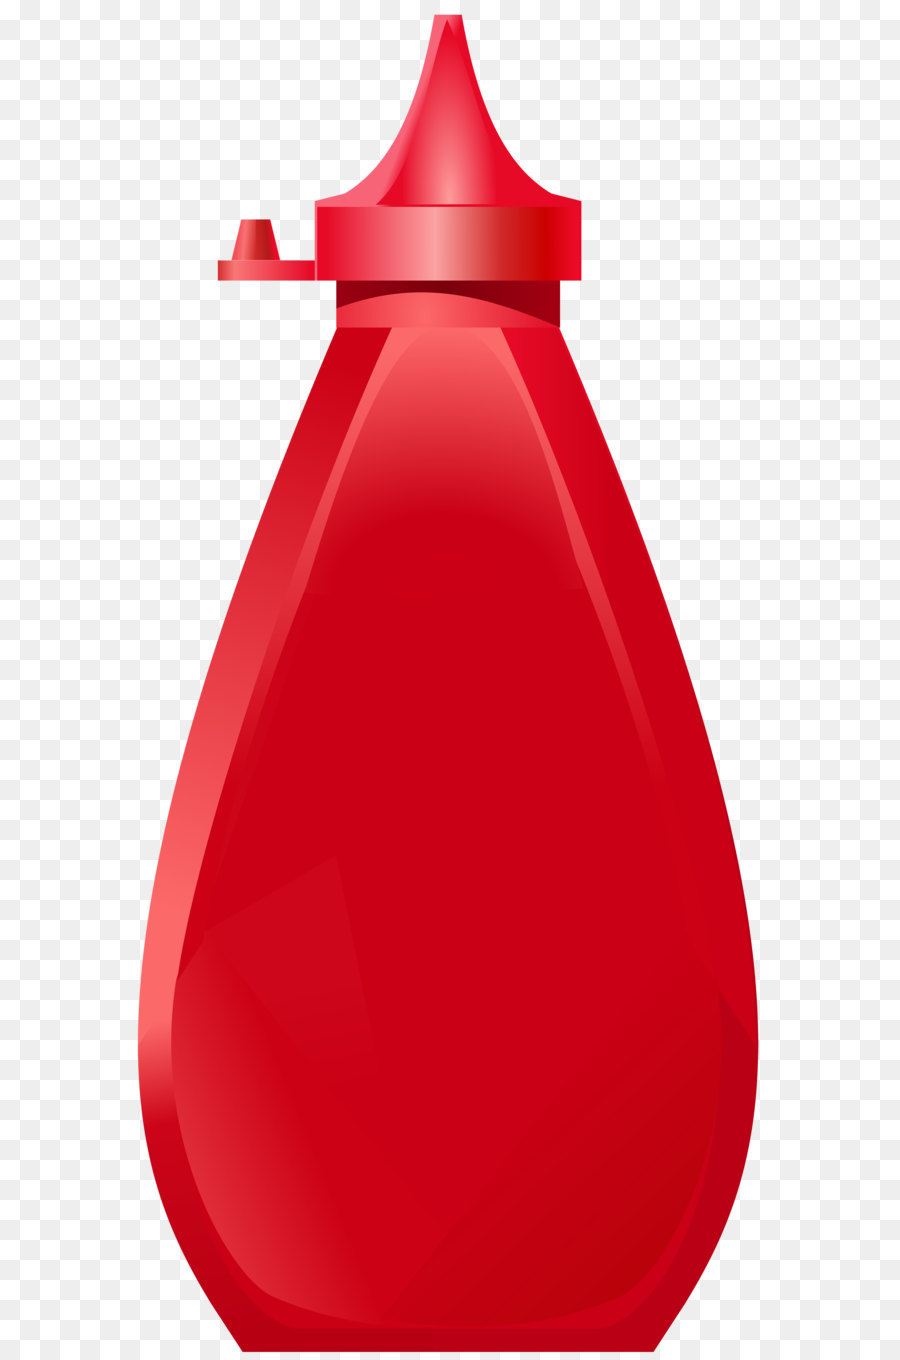 Ketchup bottle clip art transparent art image jpg